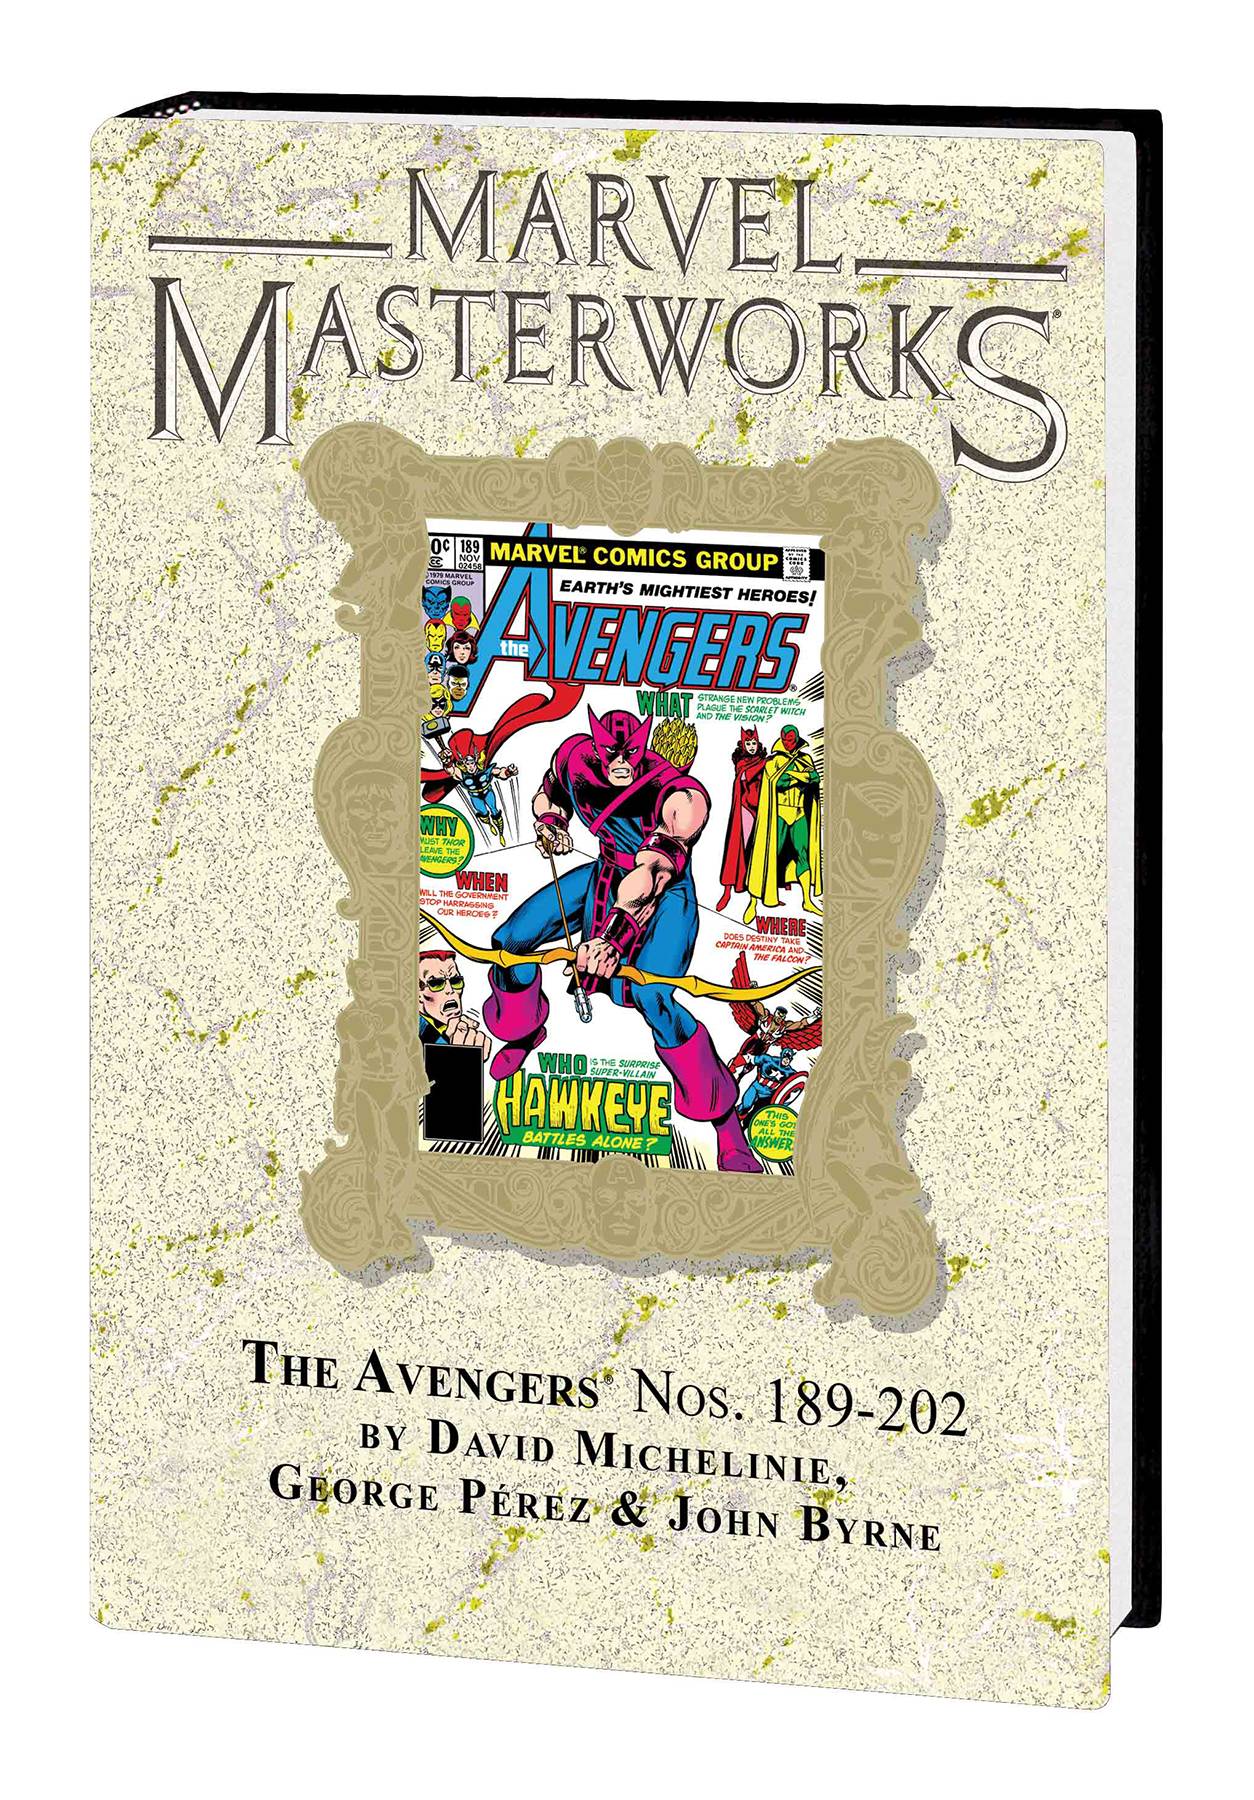 Marvel Masterworks Avengers Hardcover Volume 19 Direct Market Edition Edition 273